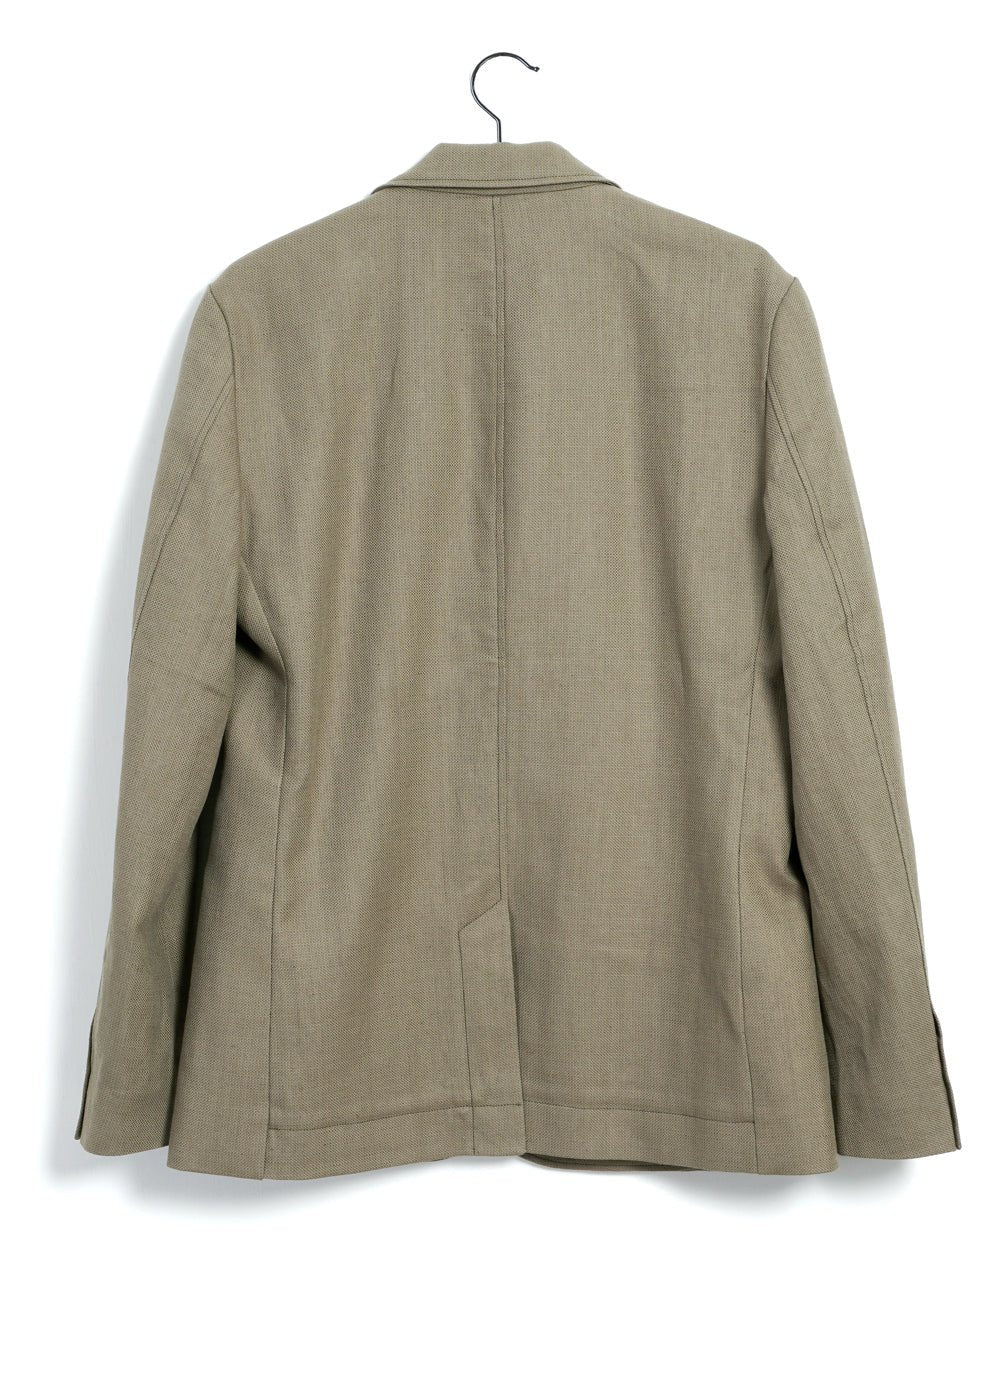 Khaki Green Linen Suit - Hangrr